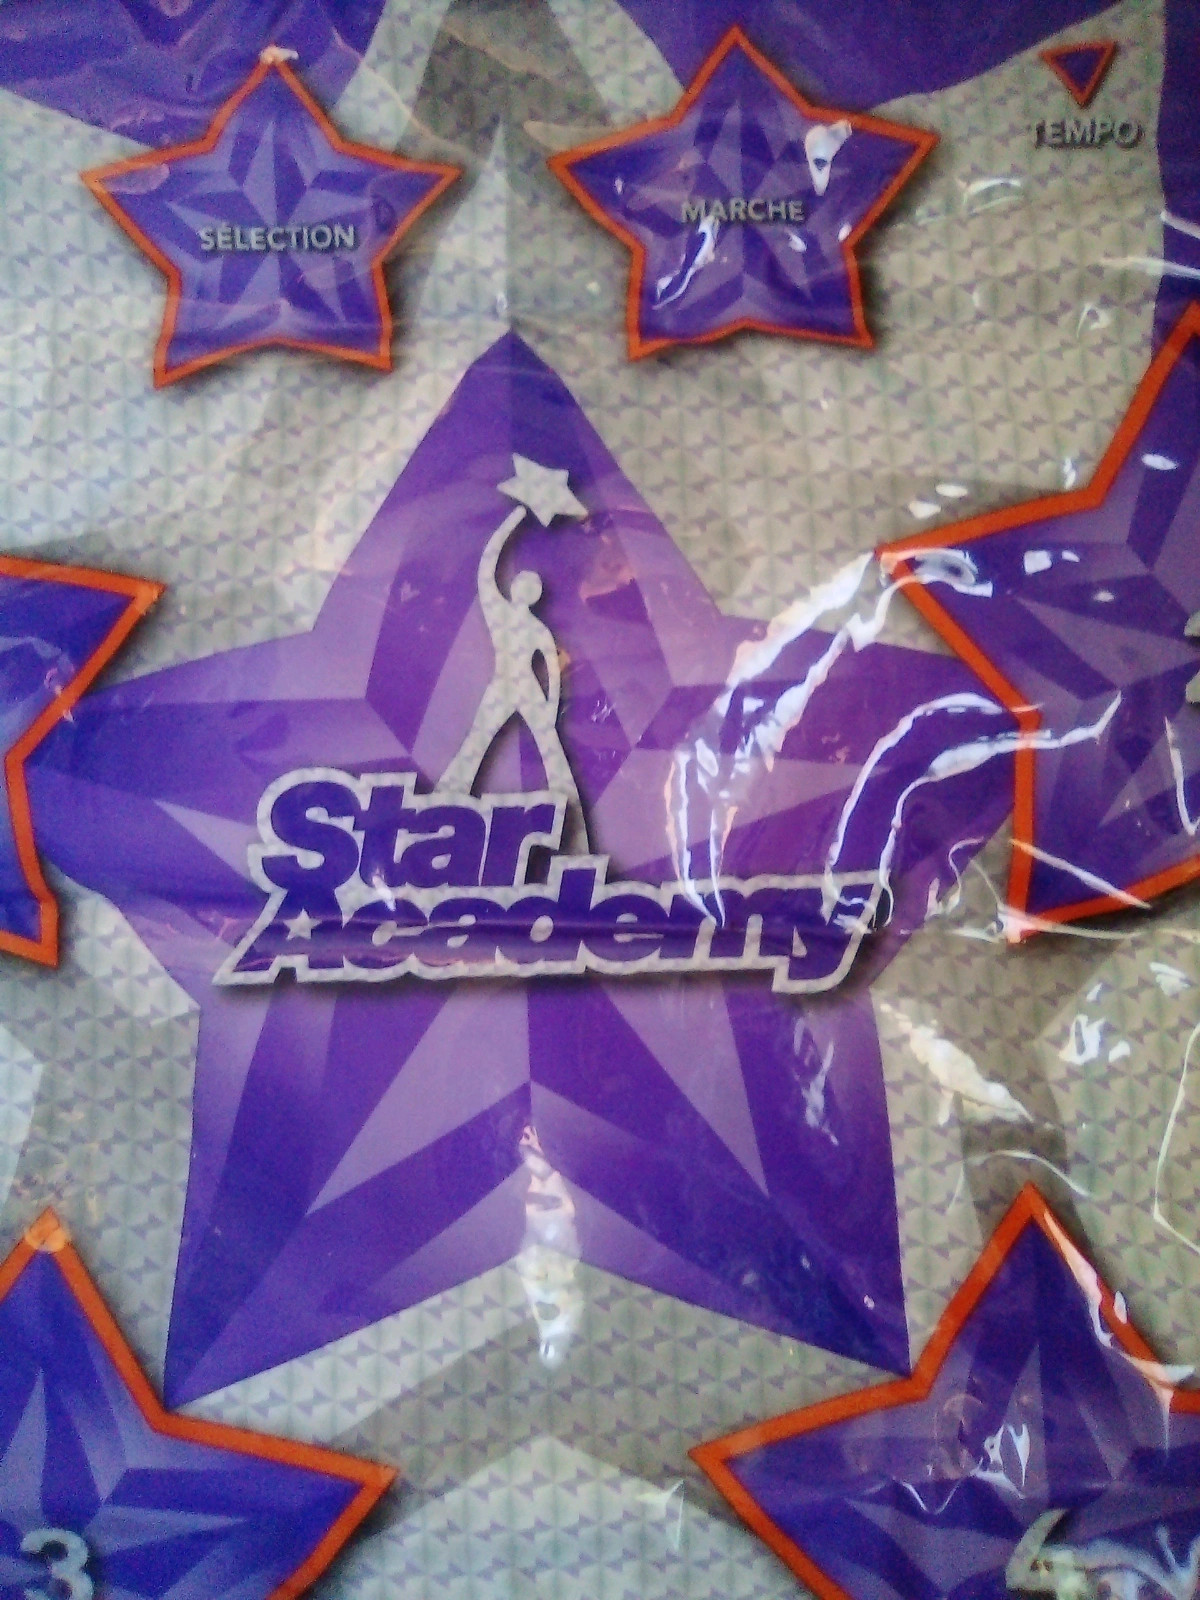 Tapis de danse - Star Academy - 3 styles musicaux - 3 niveaux de danse